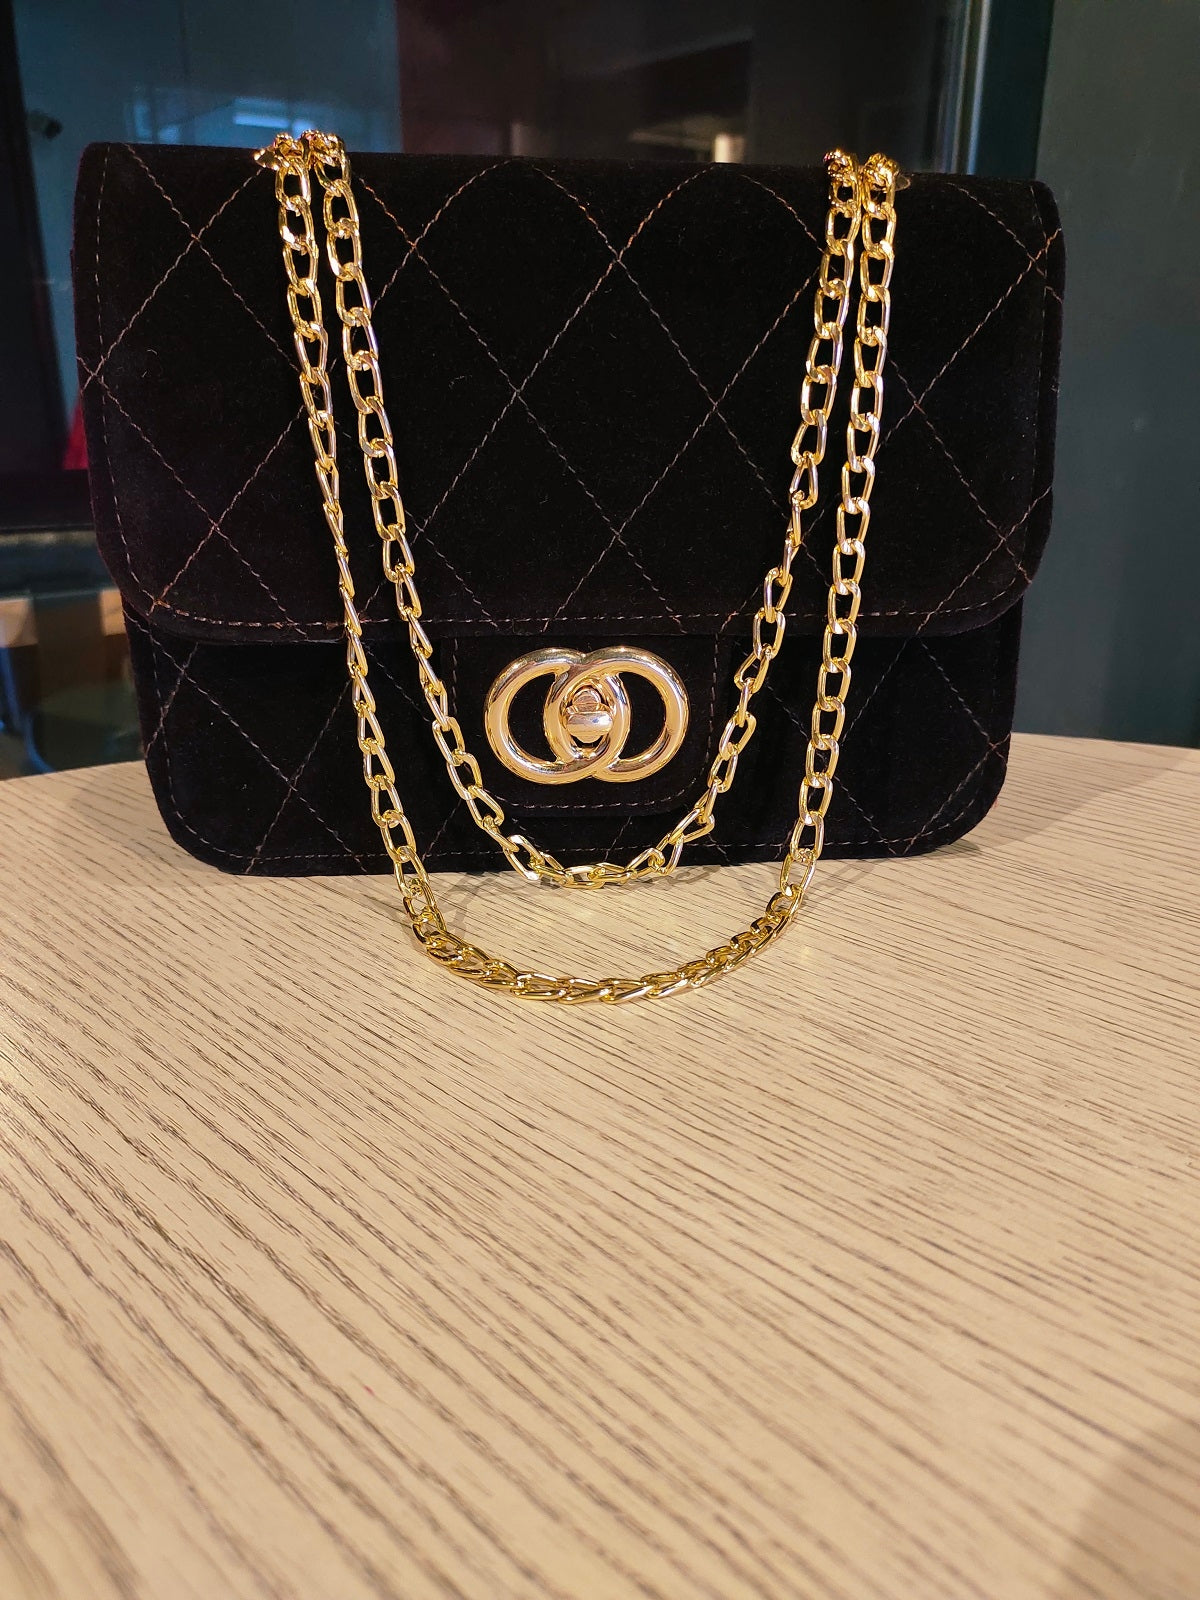 Stylish Velvet Mini Handbag with Golden Chain Strap, Perfect Small Crossbody Purse for Women